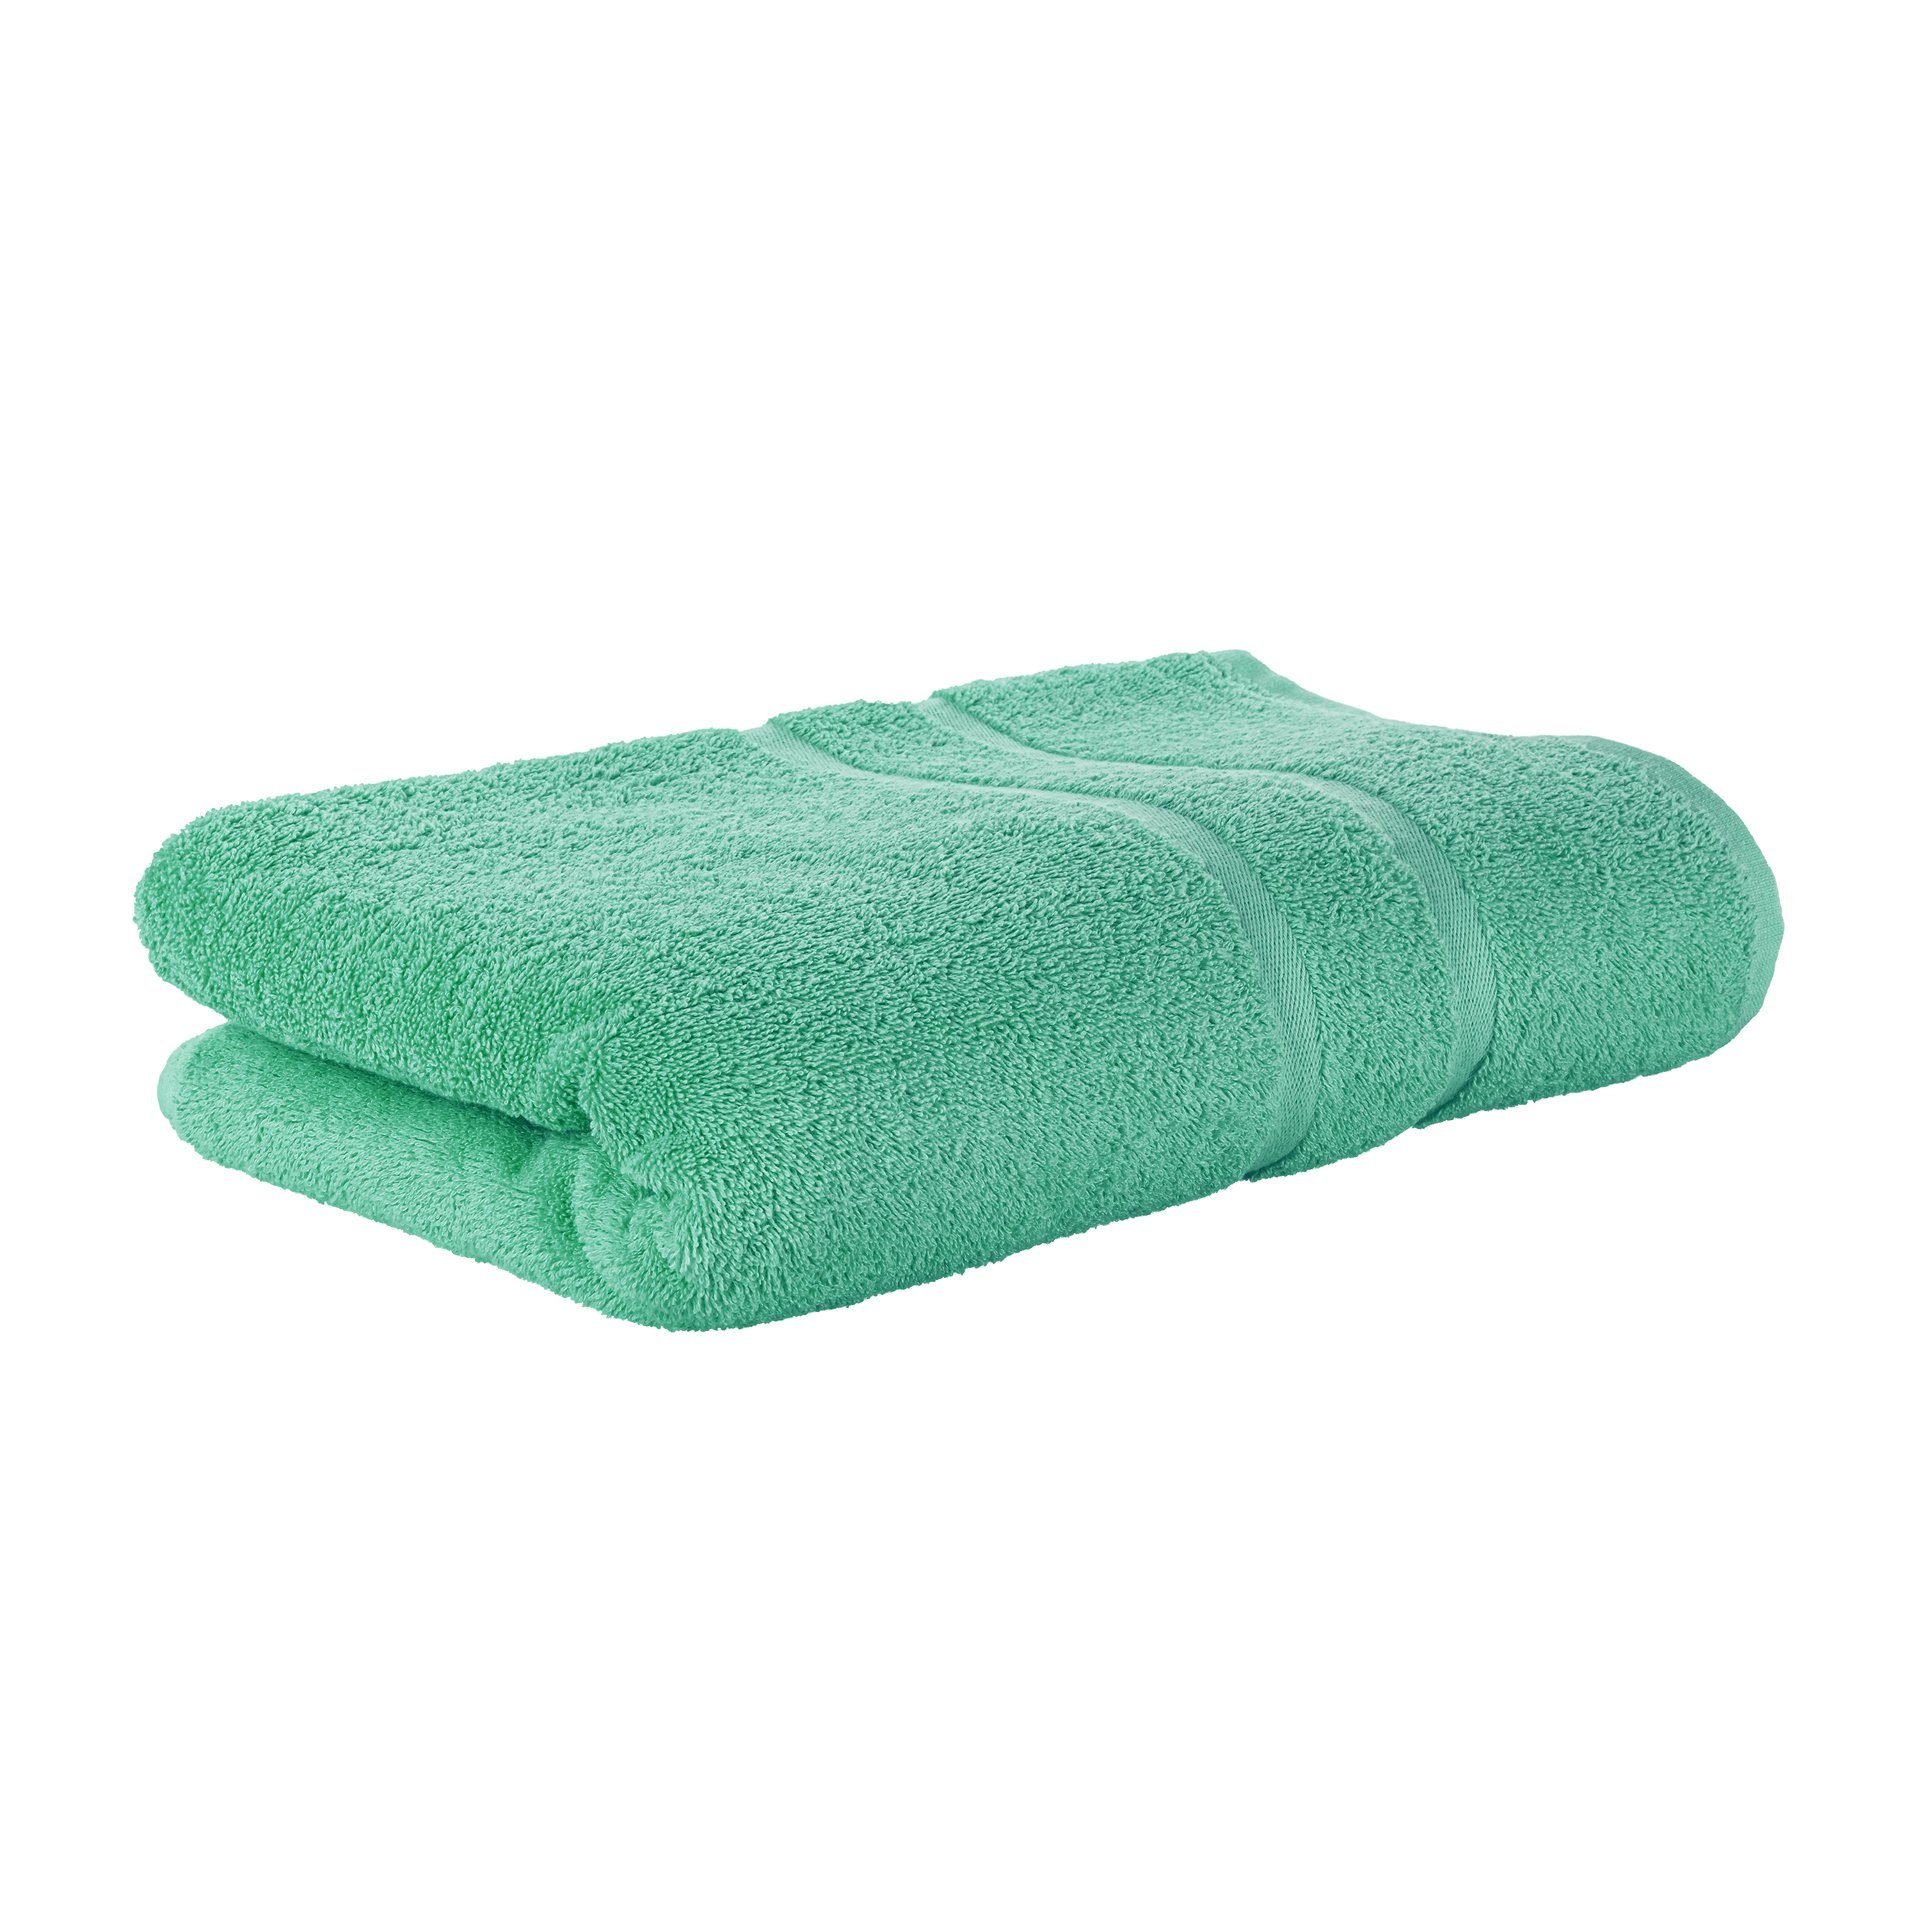 StickandShine Handtuch in Handtücher Gästehandtücher Saunatücher Baumwolle 100% Smaragdgrün 500 Wahl zur Badetücher Duschtücher GSM